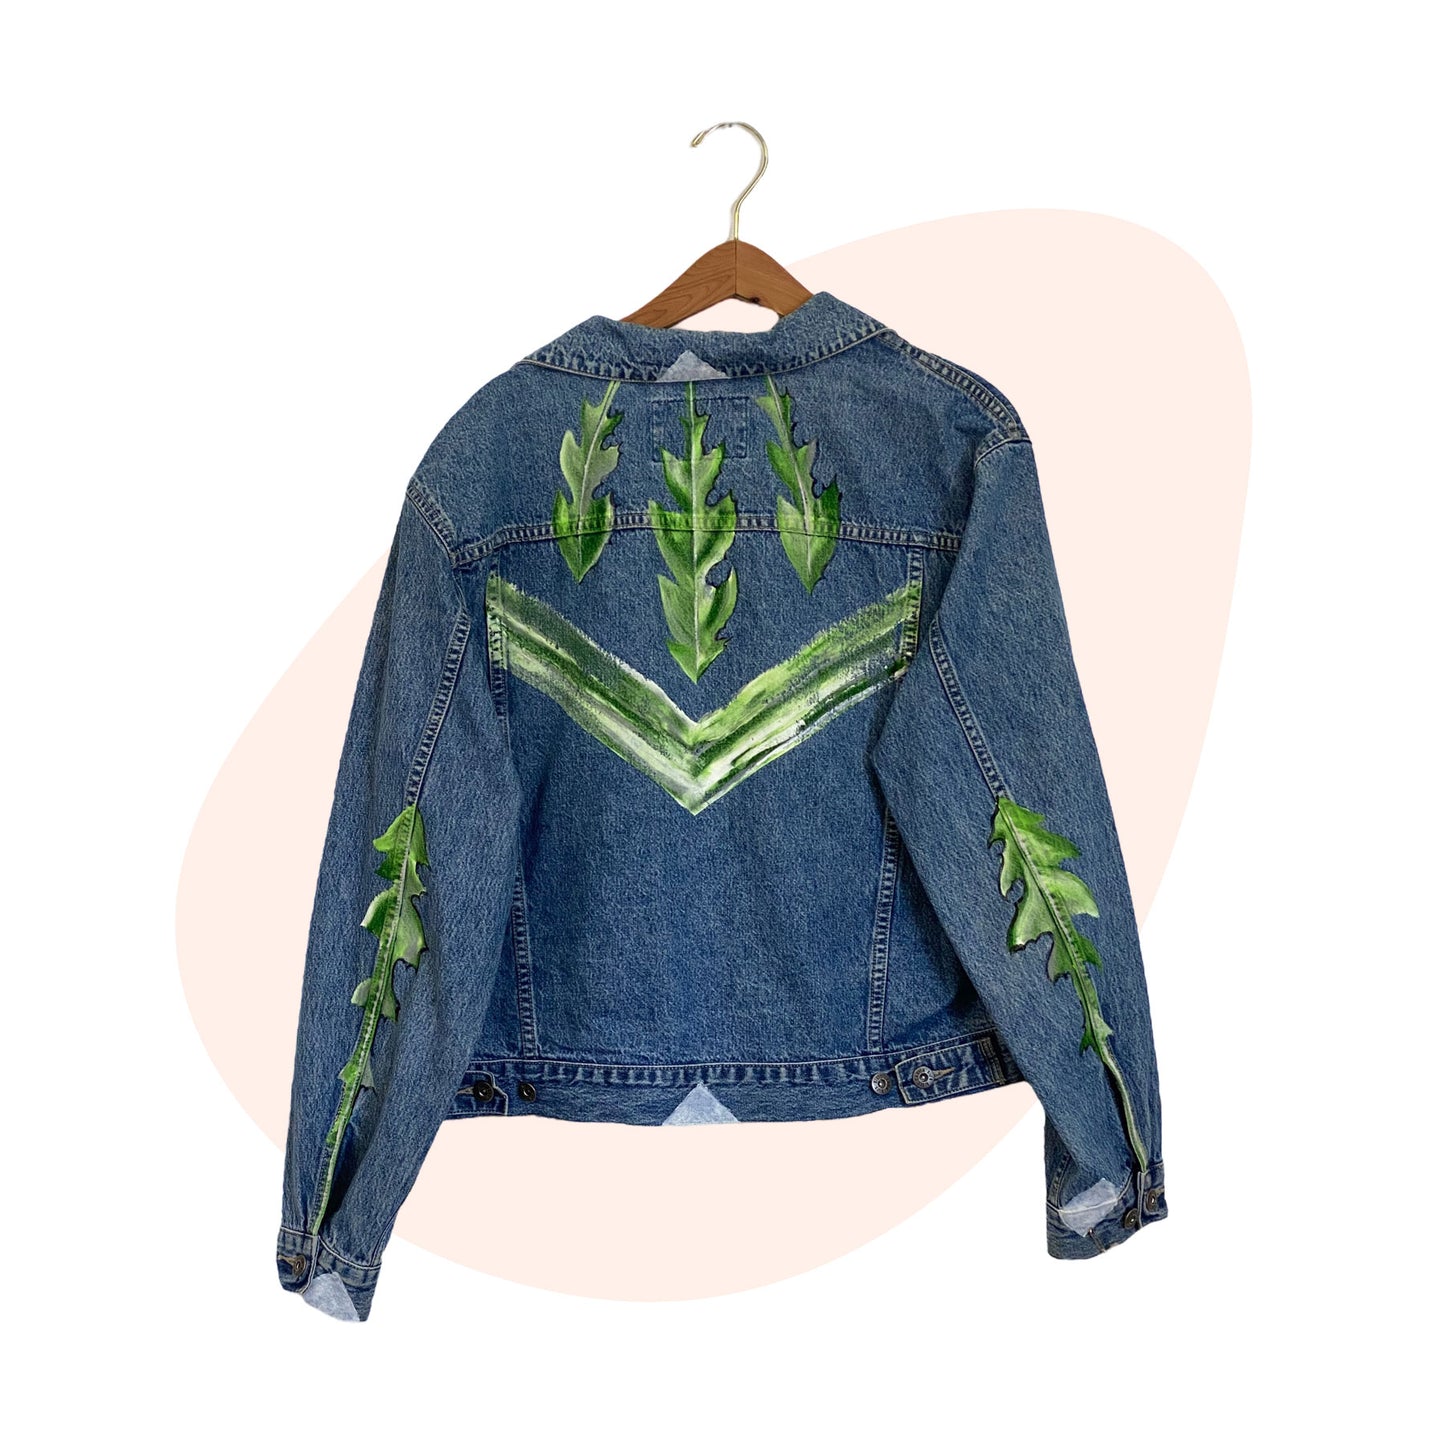 Reflective Jacket #15 - Dandelion Dream - Size M